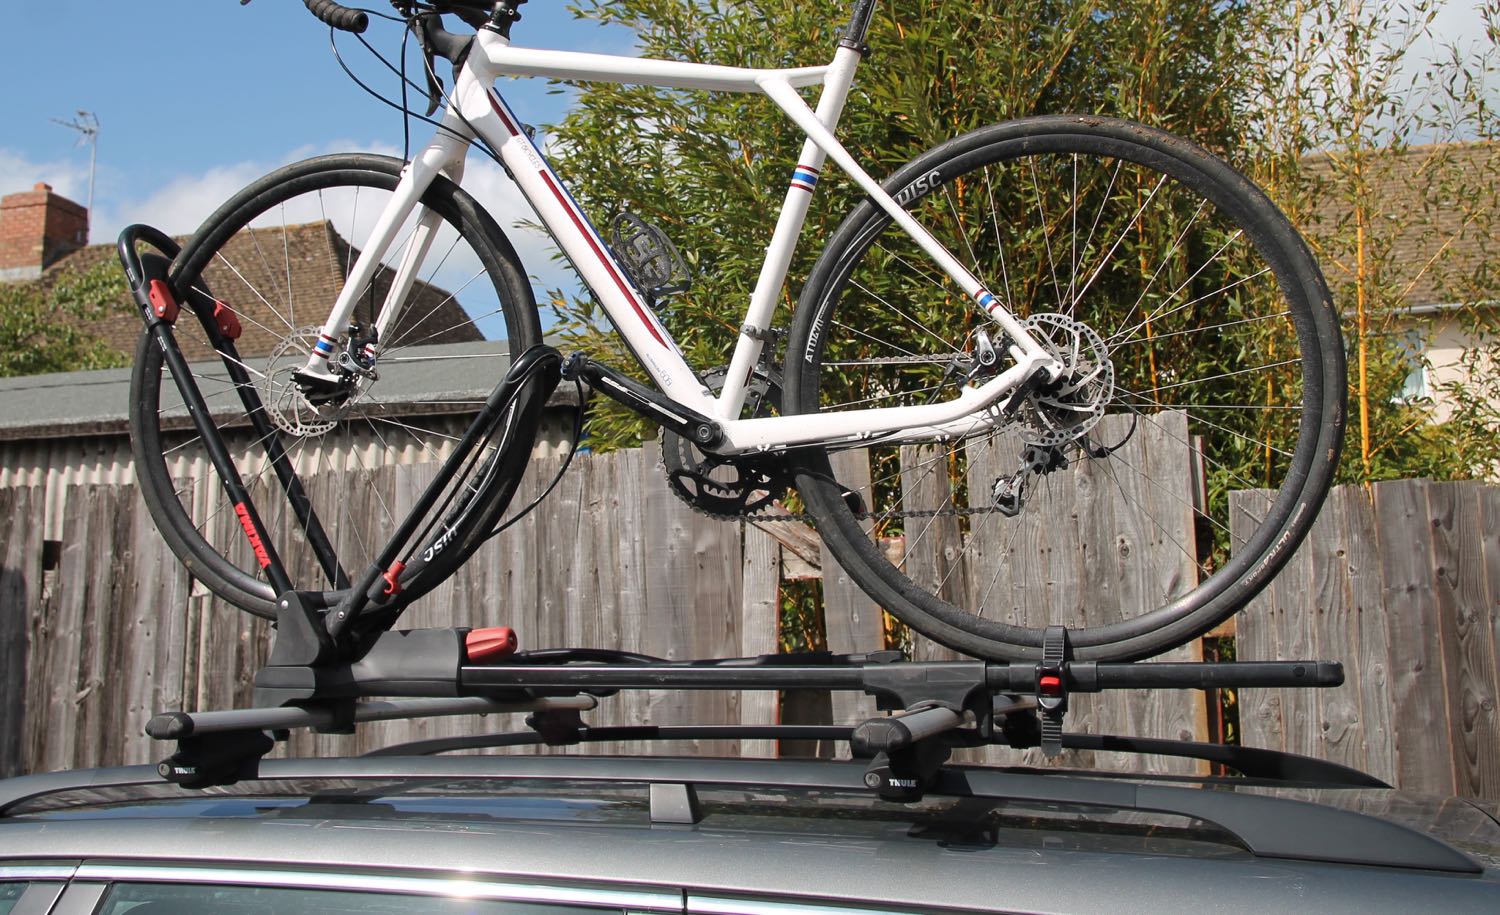 yakima frontloader bike carrier